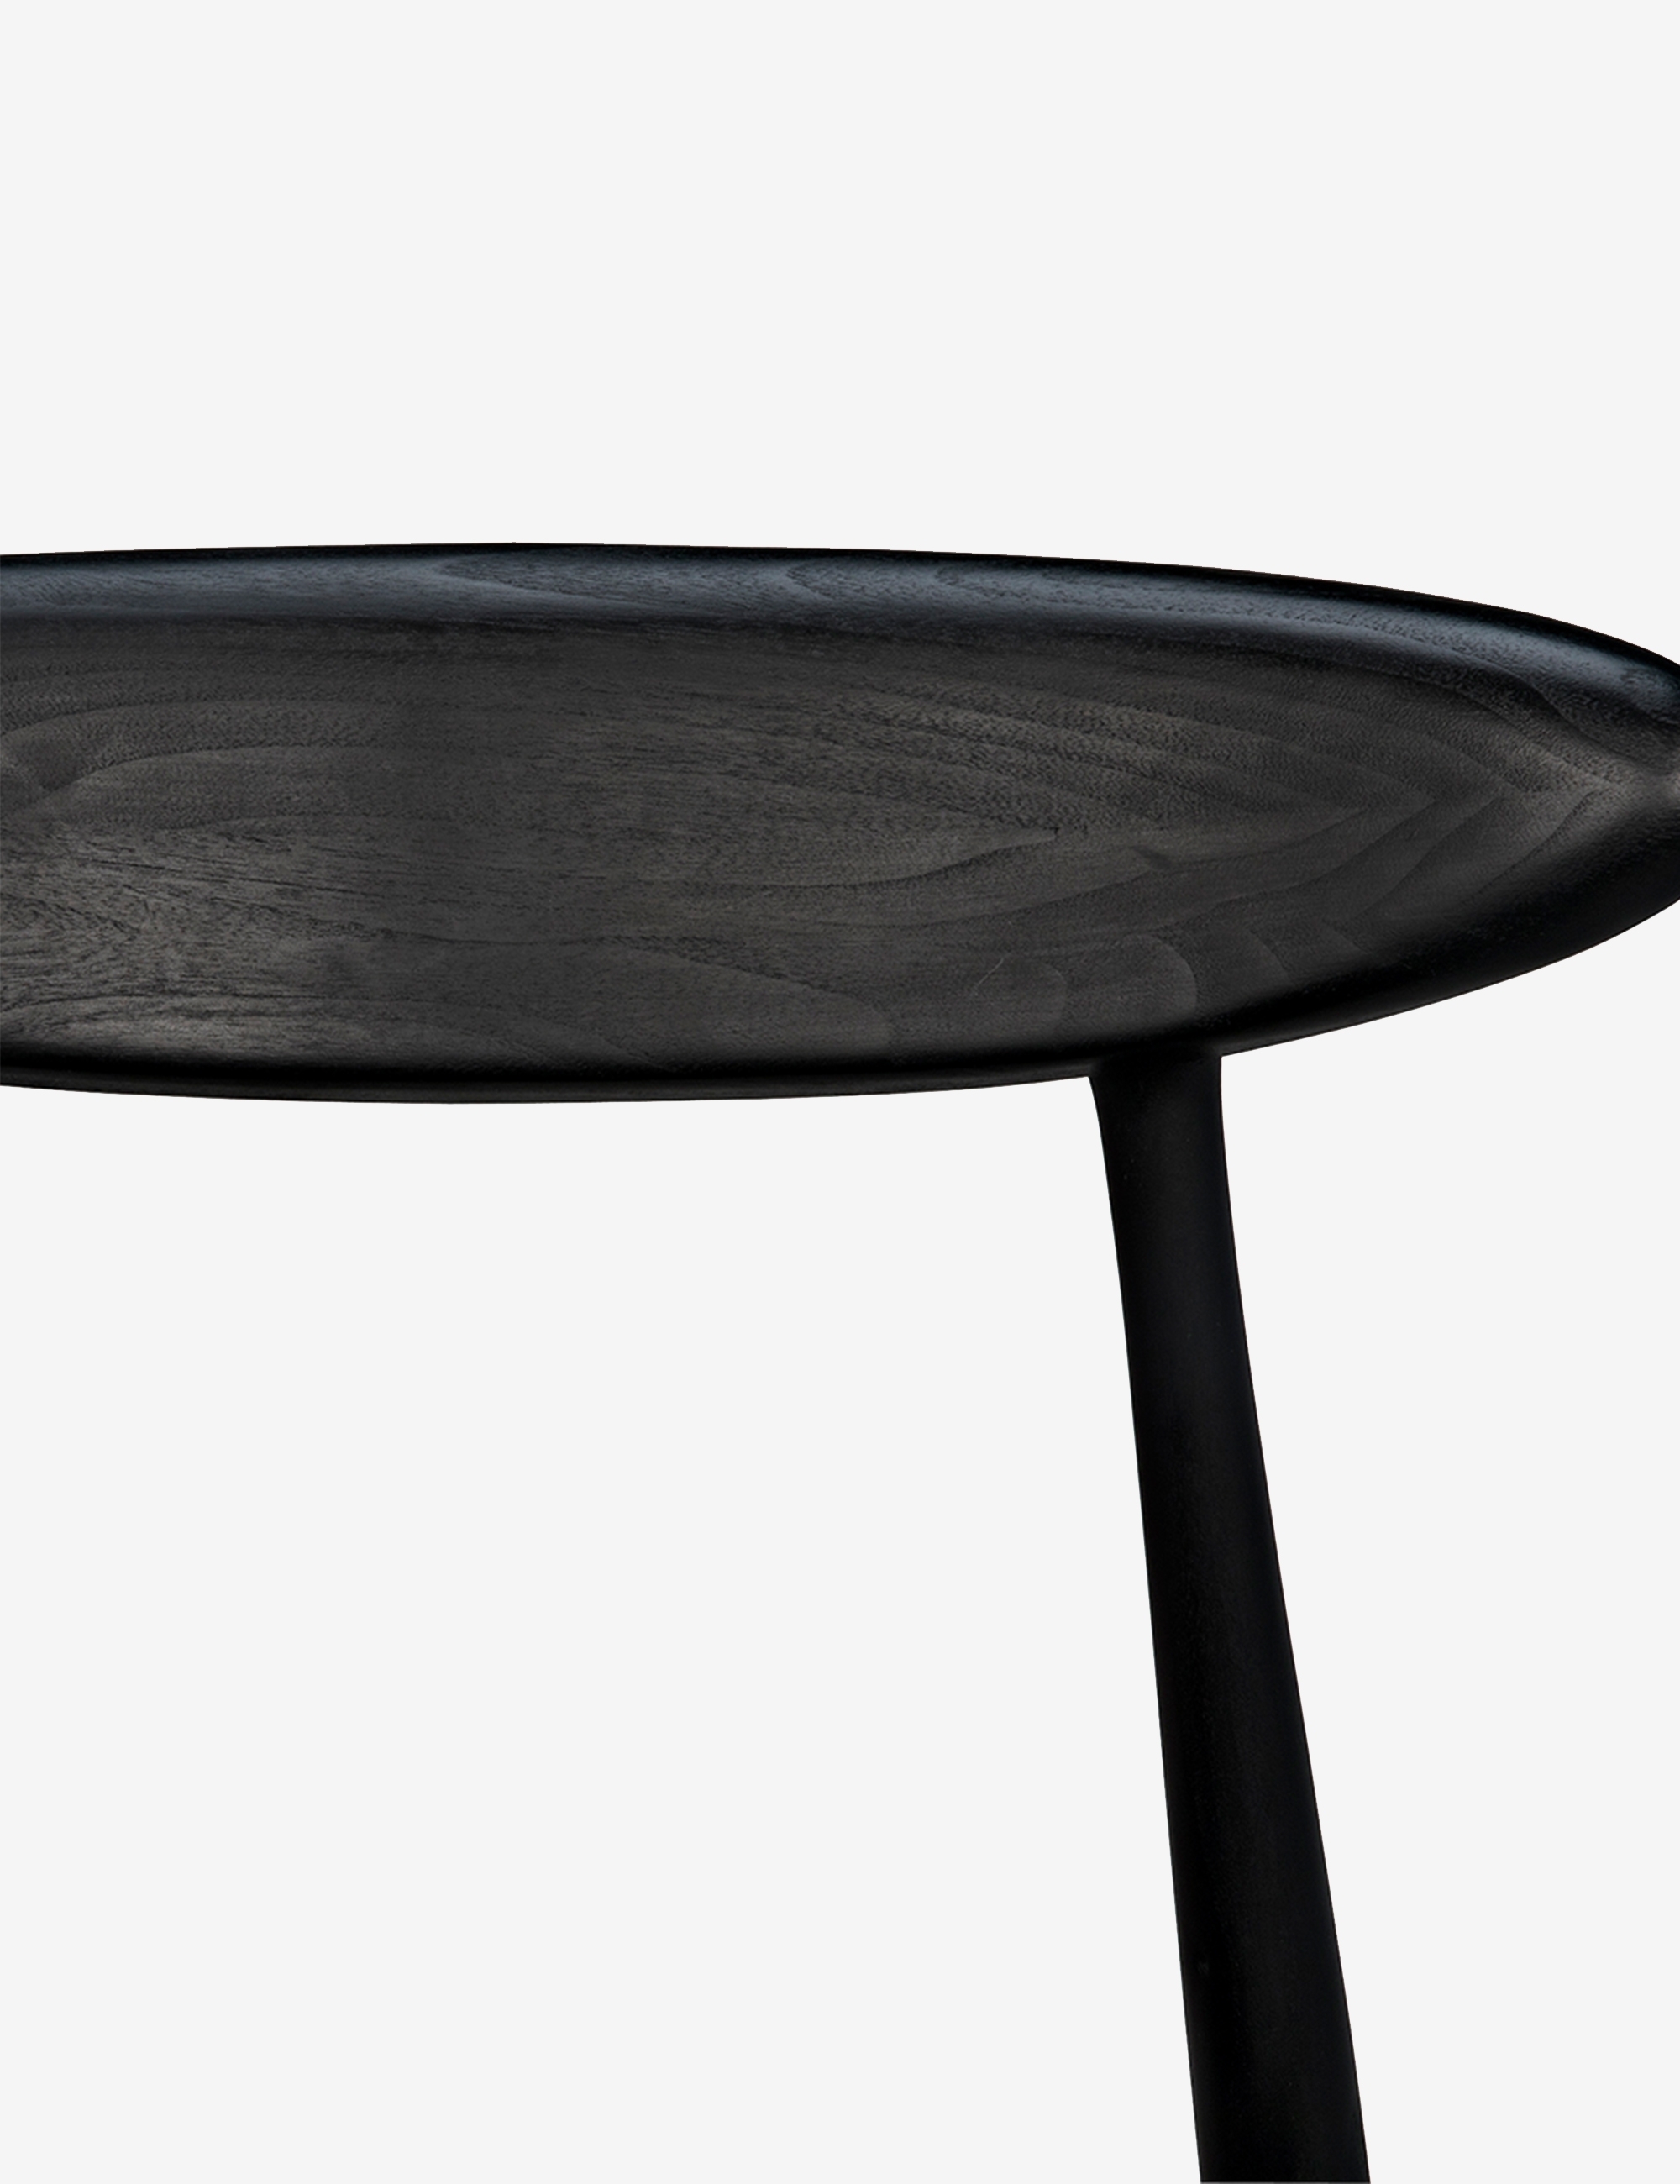 Marinn Chair, Charcoal Black - Image 6